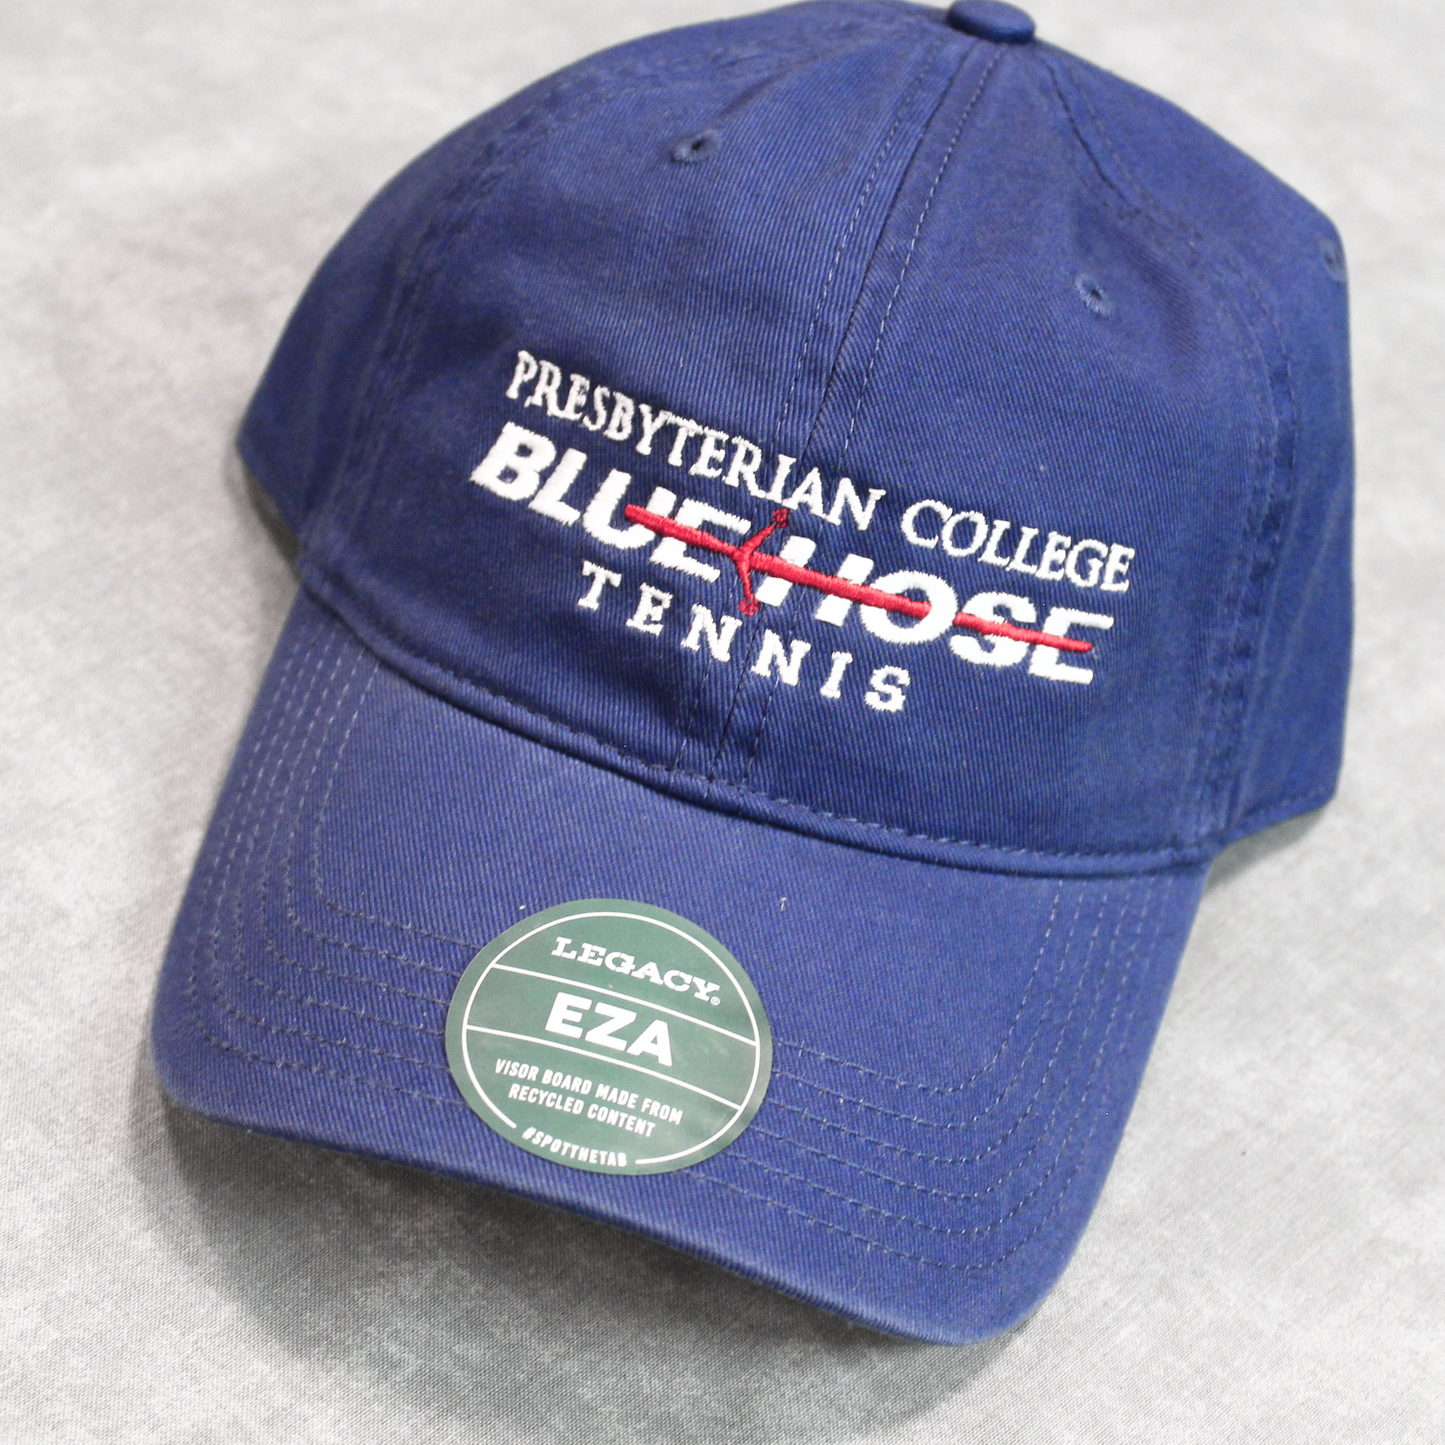 EZA PC Blue Hose Tennis Royal Hat